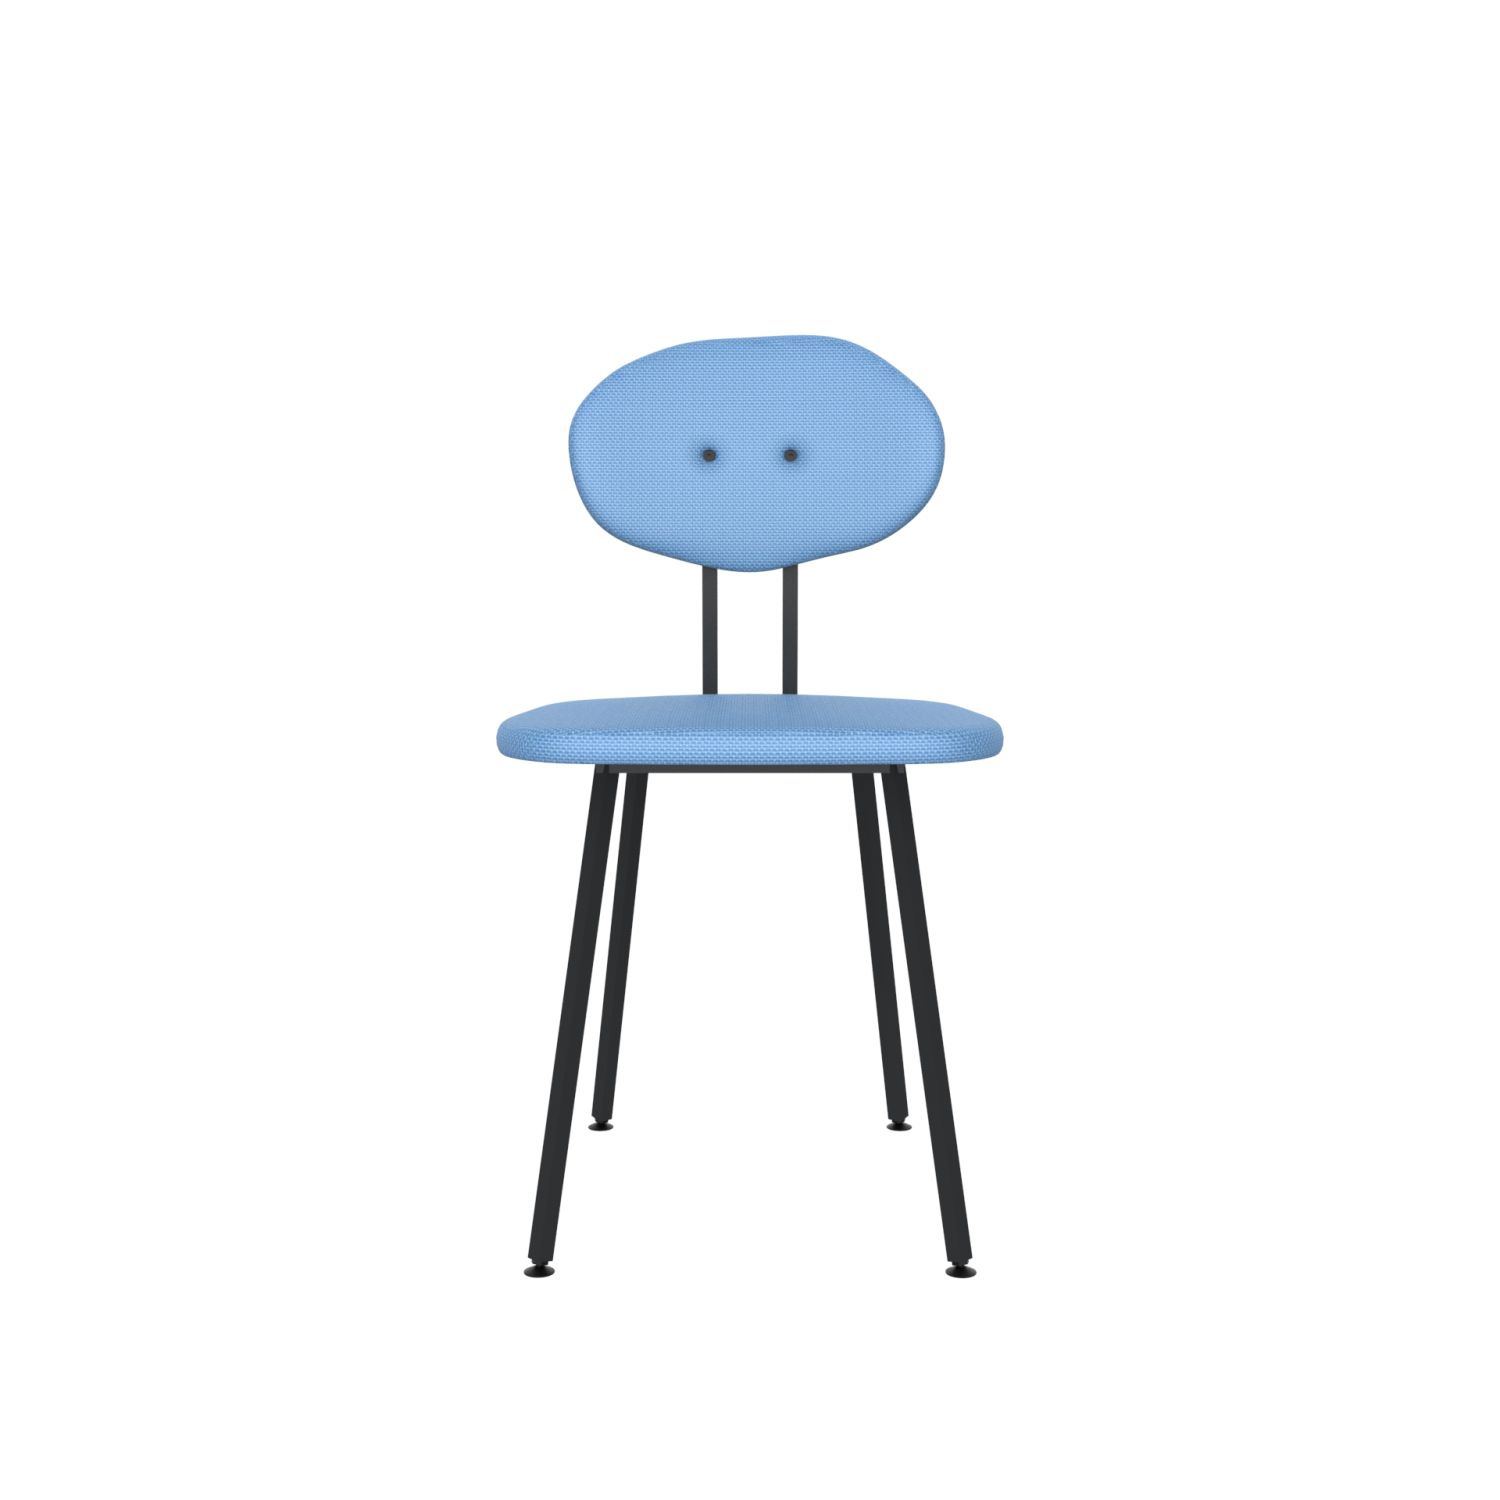 lensvelt maarten baas chair 101 not stackable without armrests backrest d blue horizon 040 black ral9005 hard leg ends